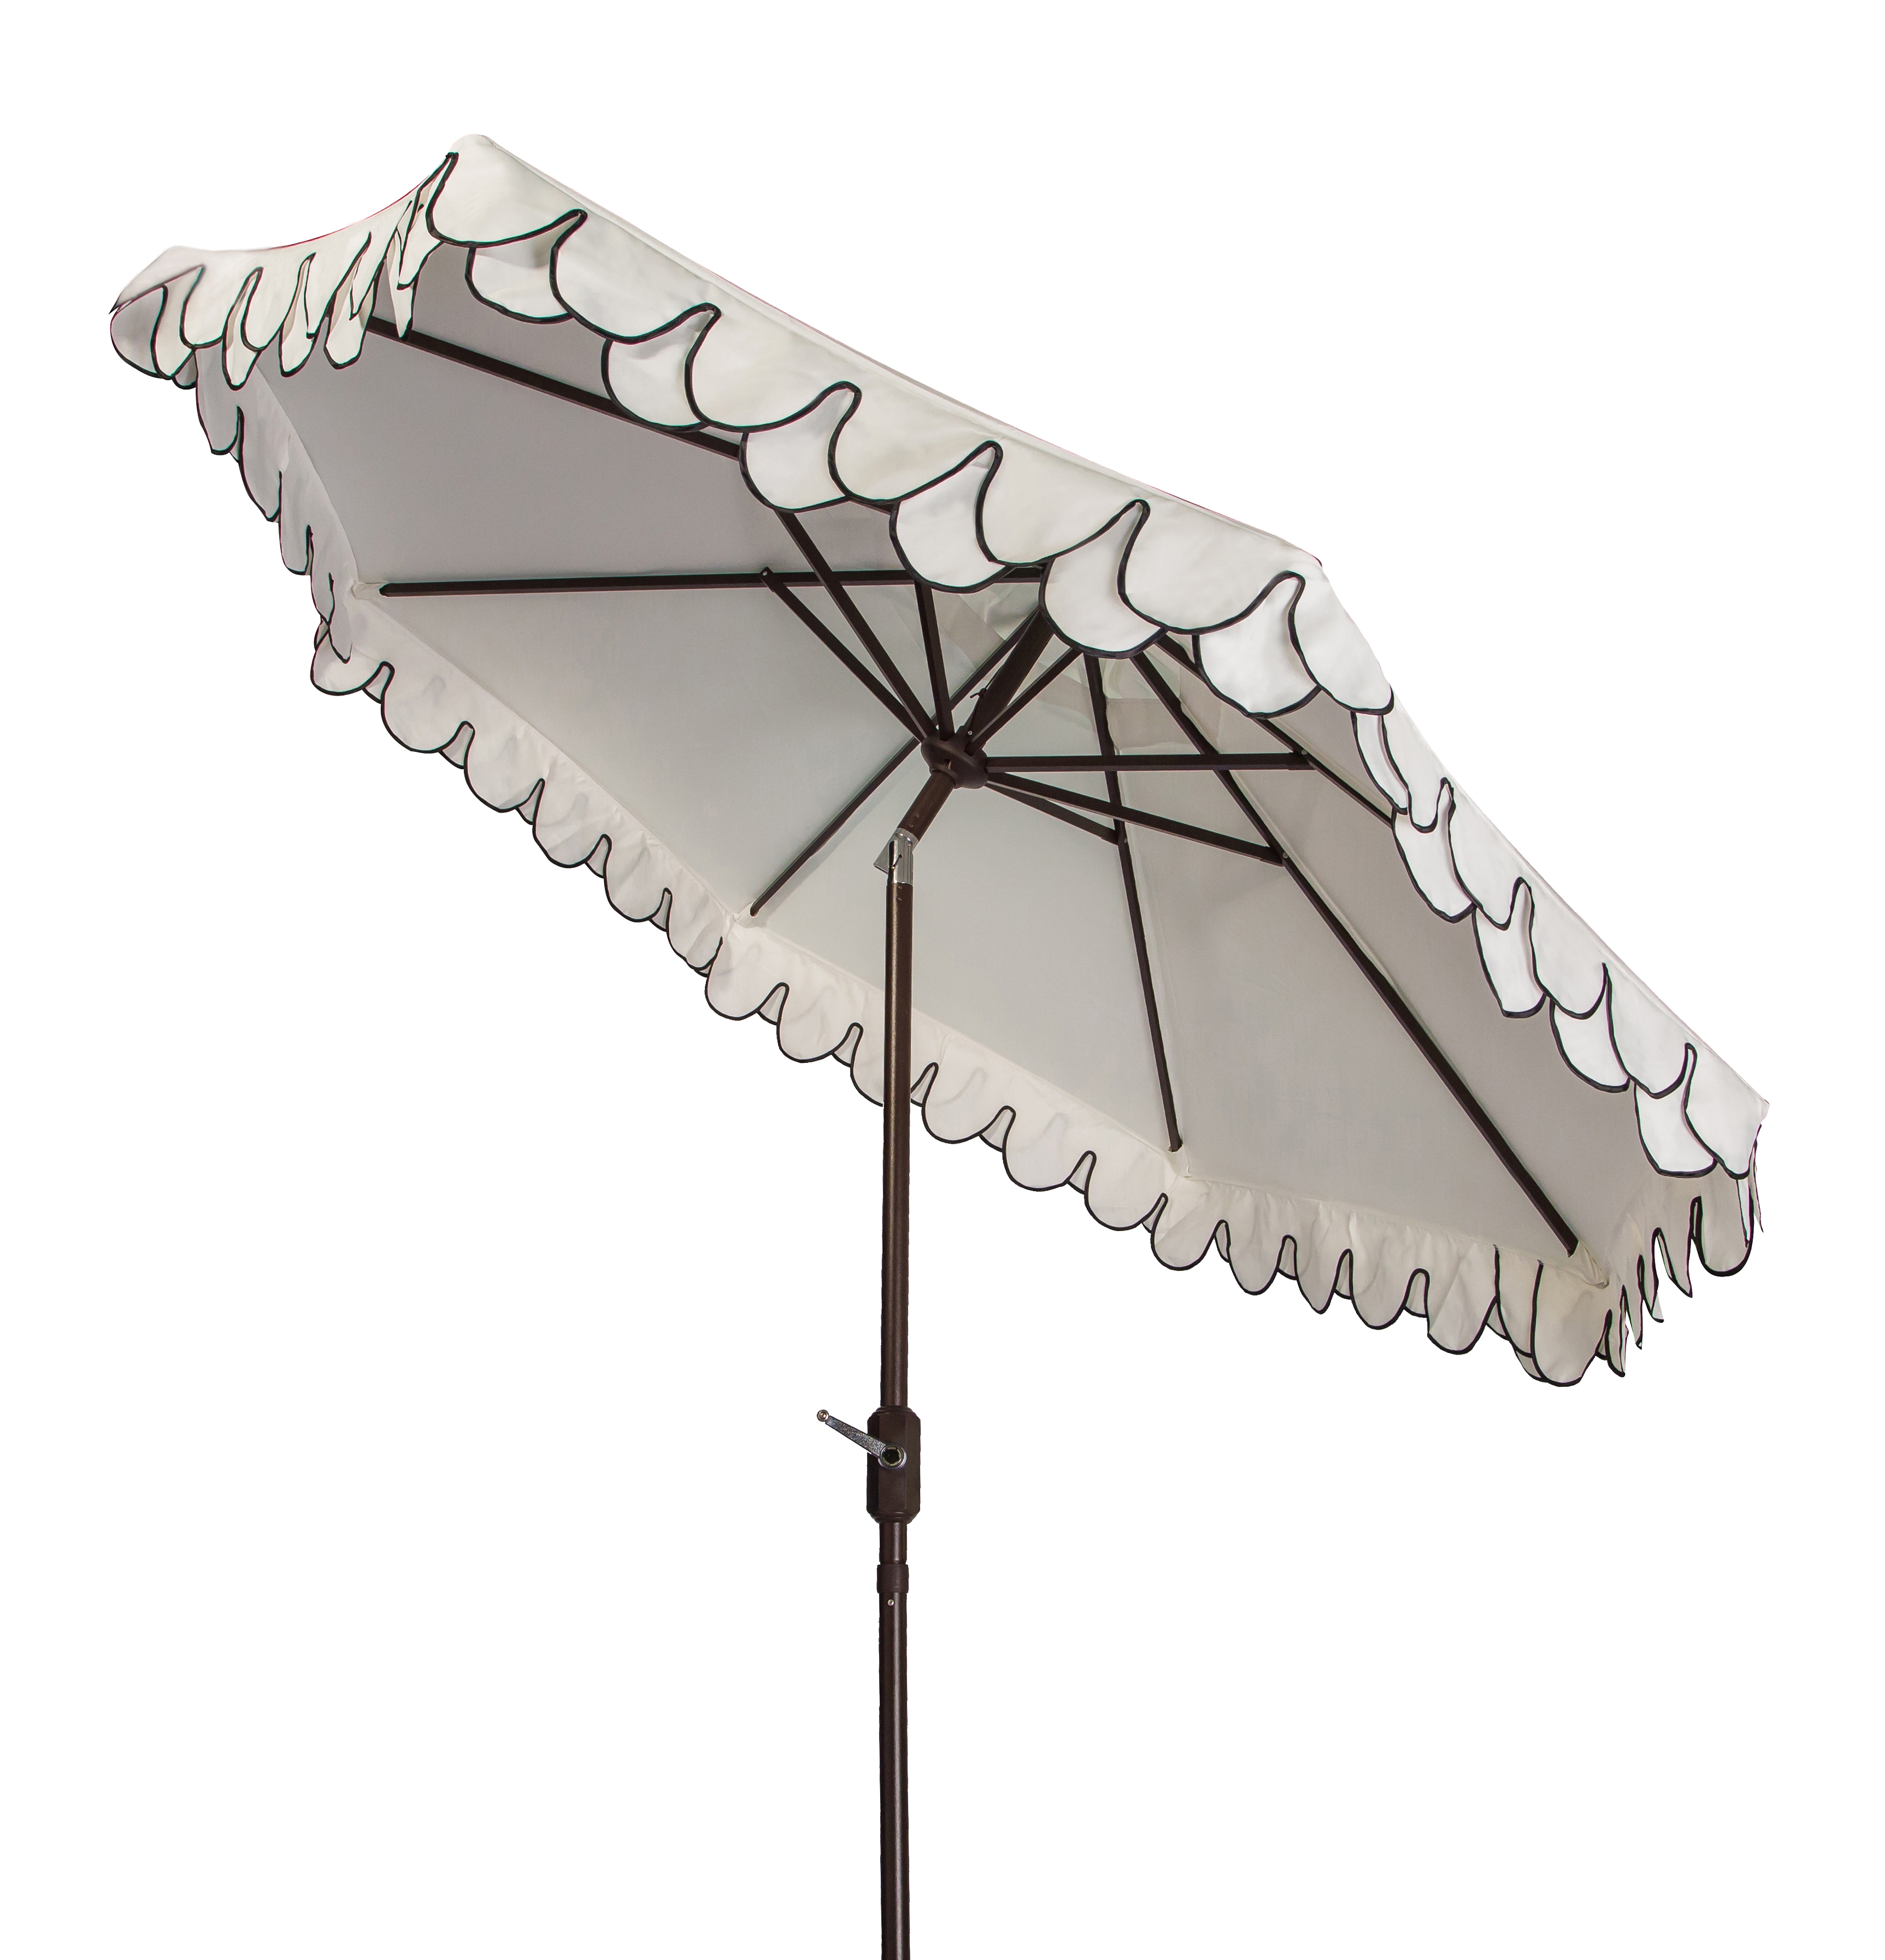 Elegant Valance 9Ft Auto Tilt Umbrella - White/Black - Arlo Home - Image 1